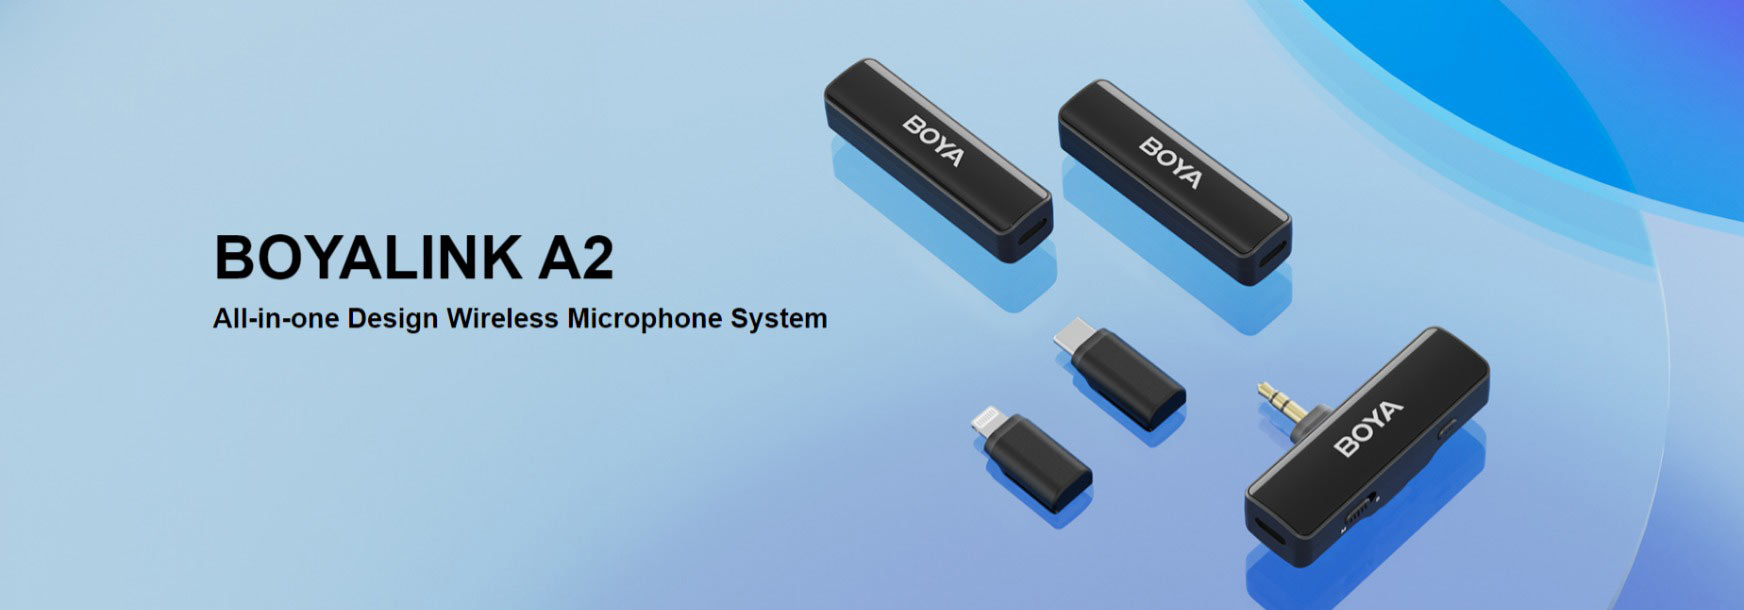 Boya BOYALINK A2 All-in-one Design Wireless Microphone System Price in BD